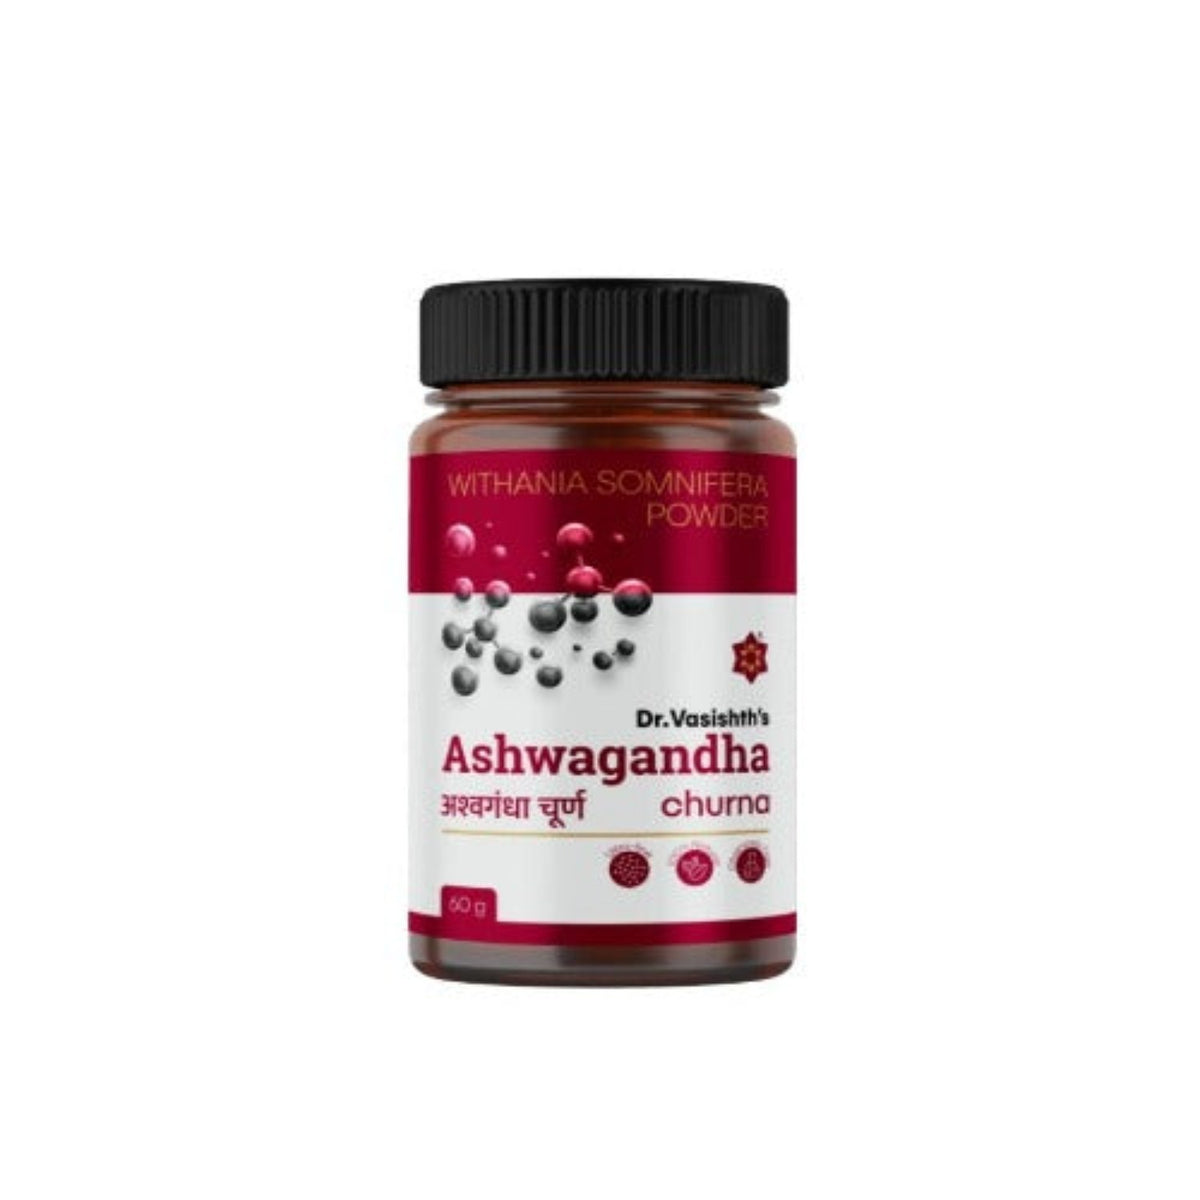 Dr.Vasishths ayurvedisches Ashwagandha-Churna-Pulver 60 g